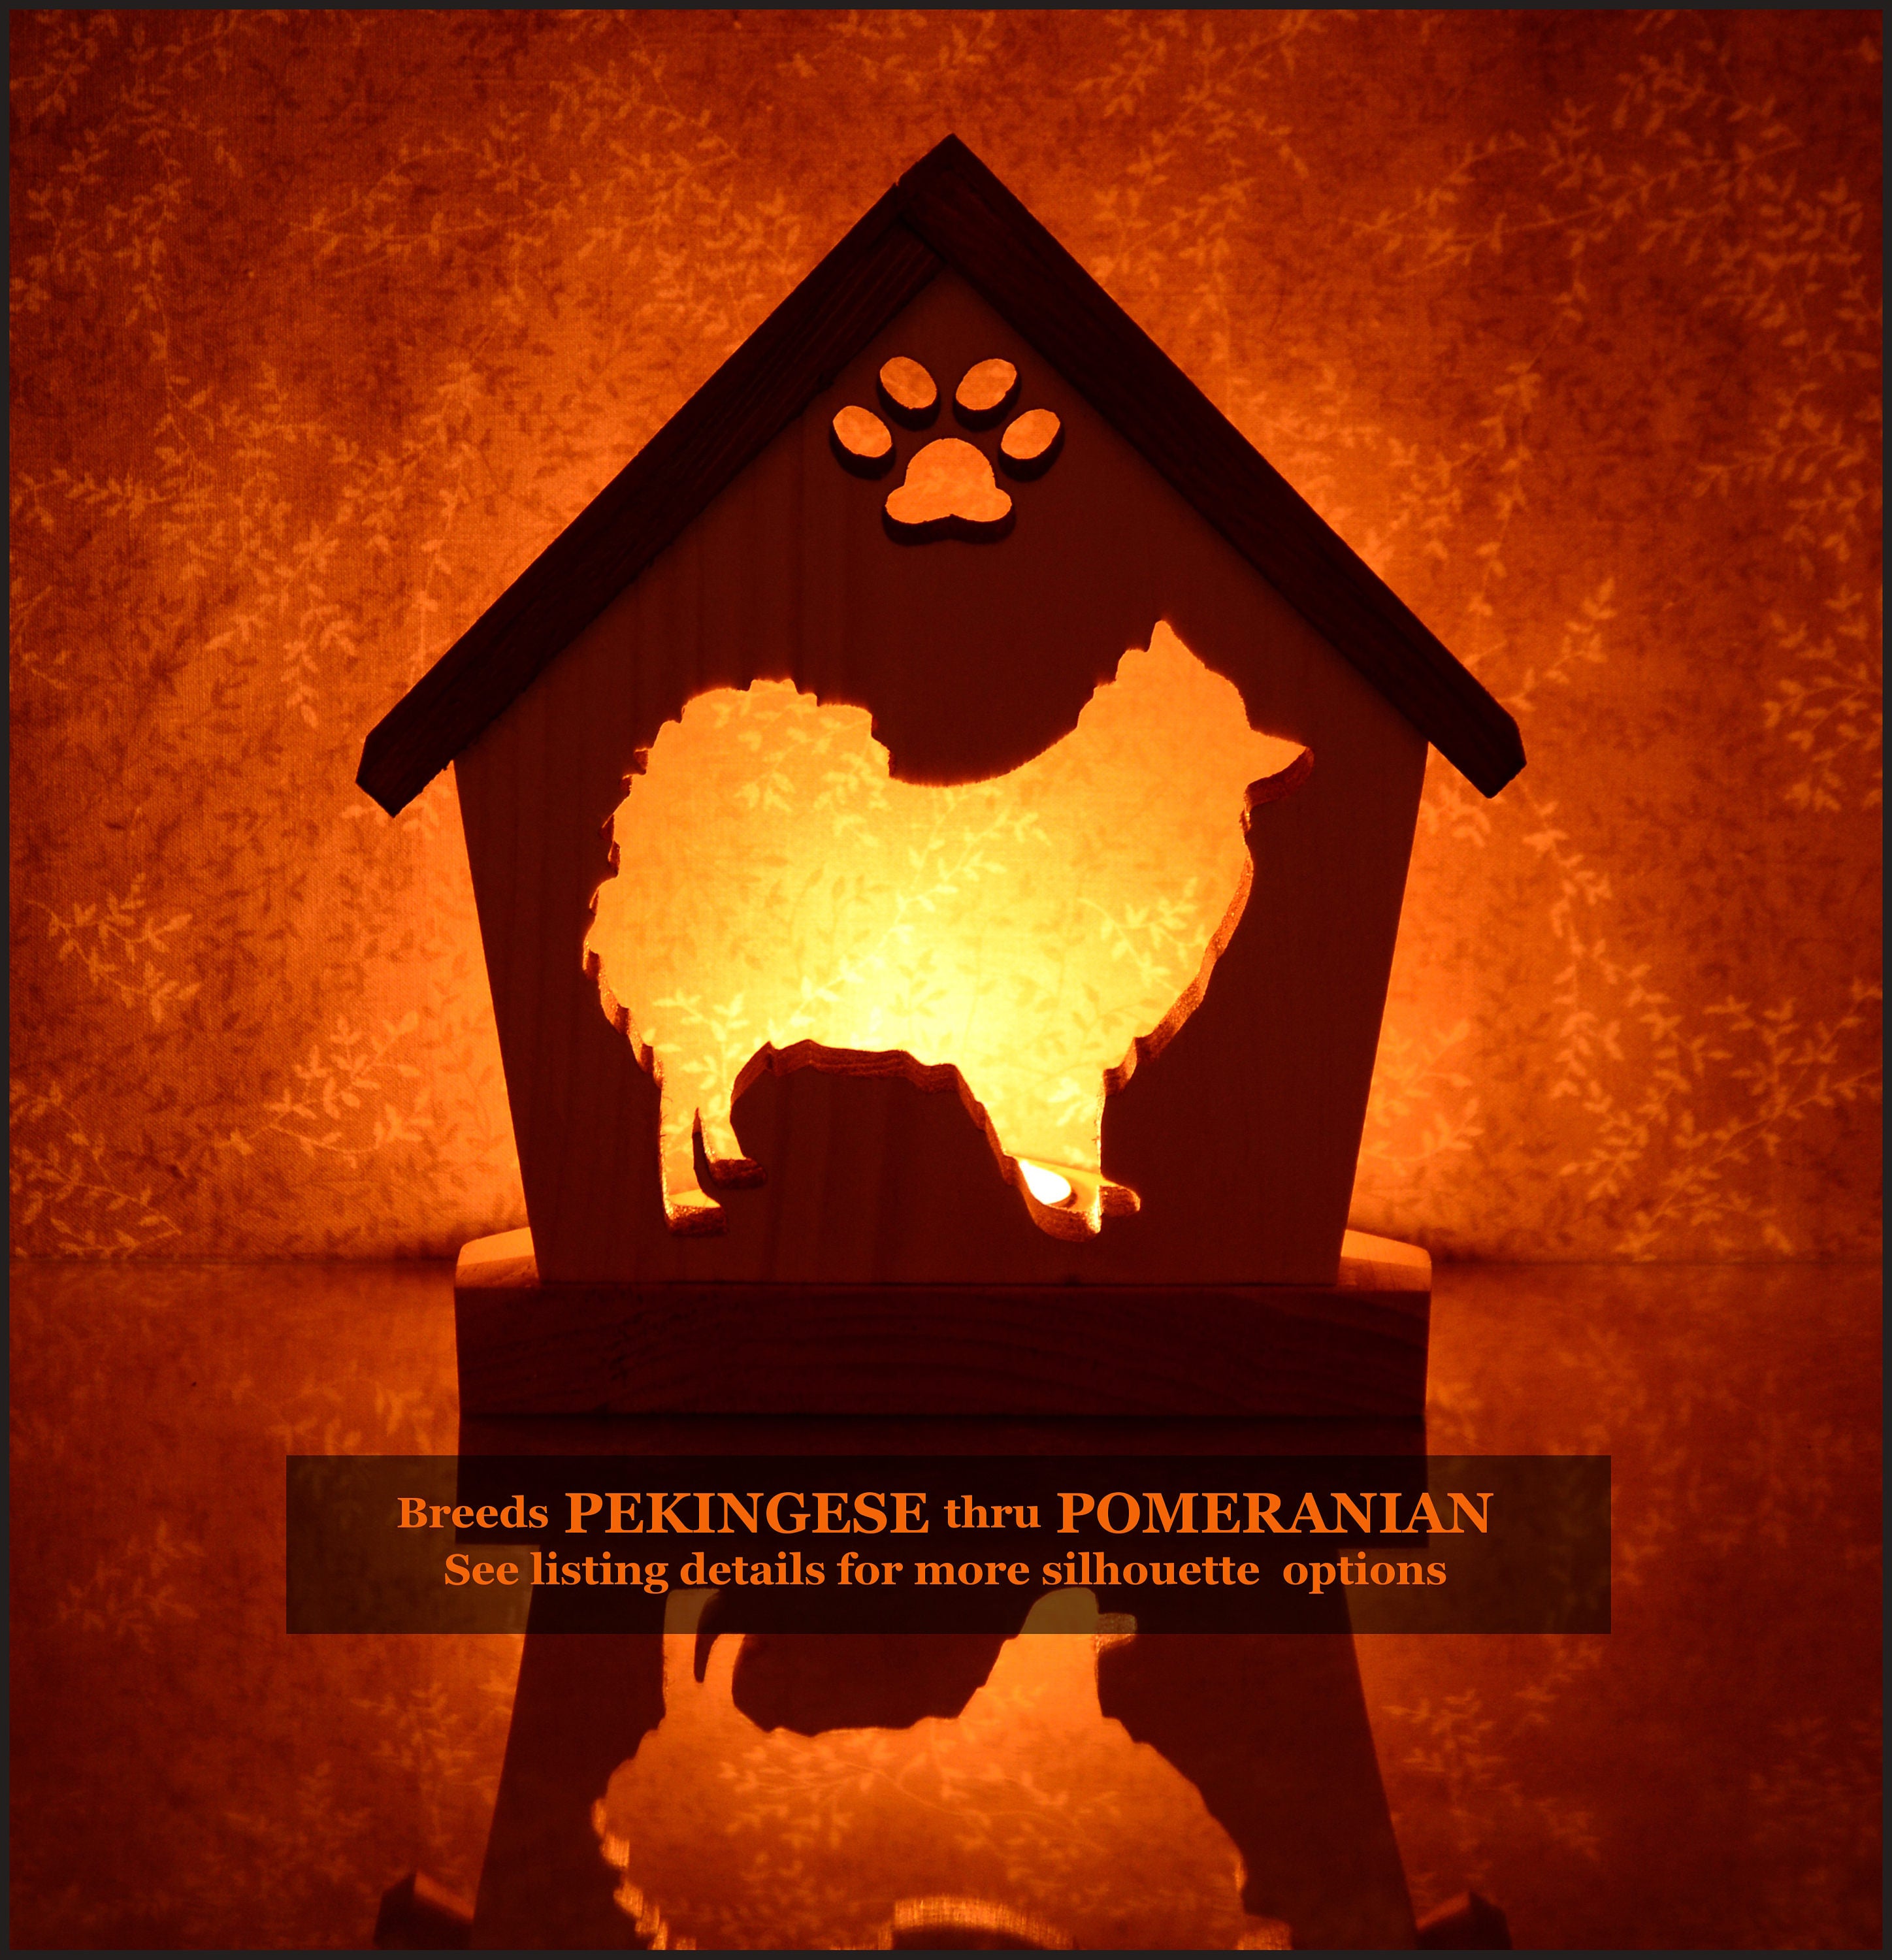 Personalized Gift For Dog Loverspet Memorialcandle Tealight Holder | Pekingesepitbullpomeranian Unique Giftspet Sympathy